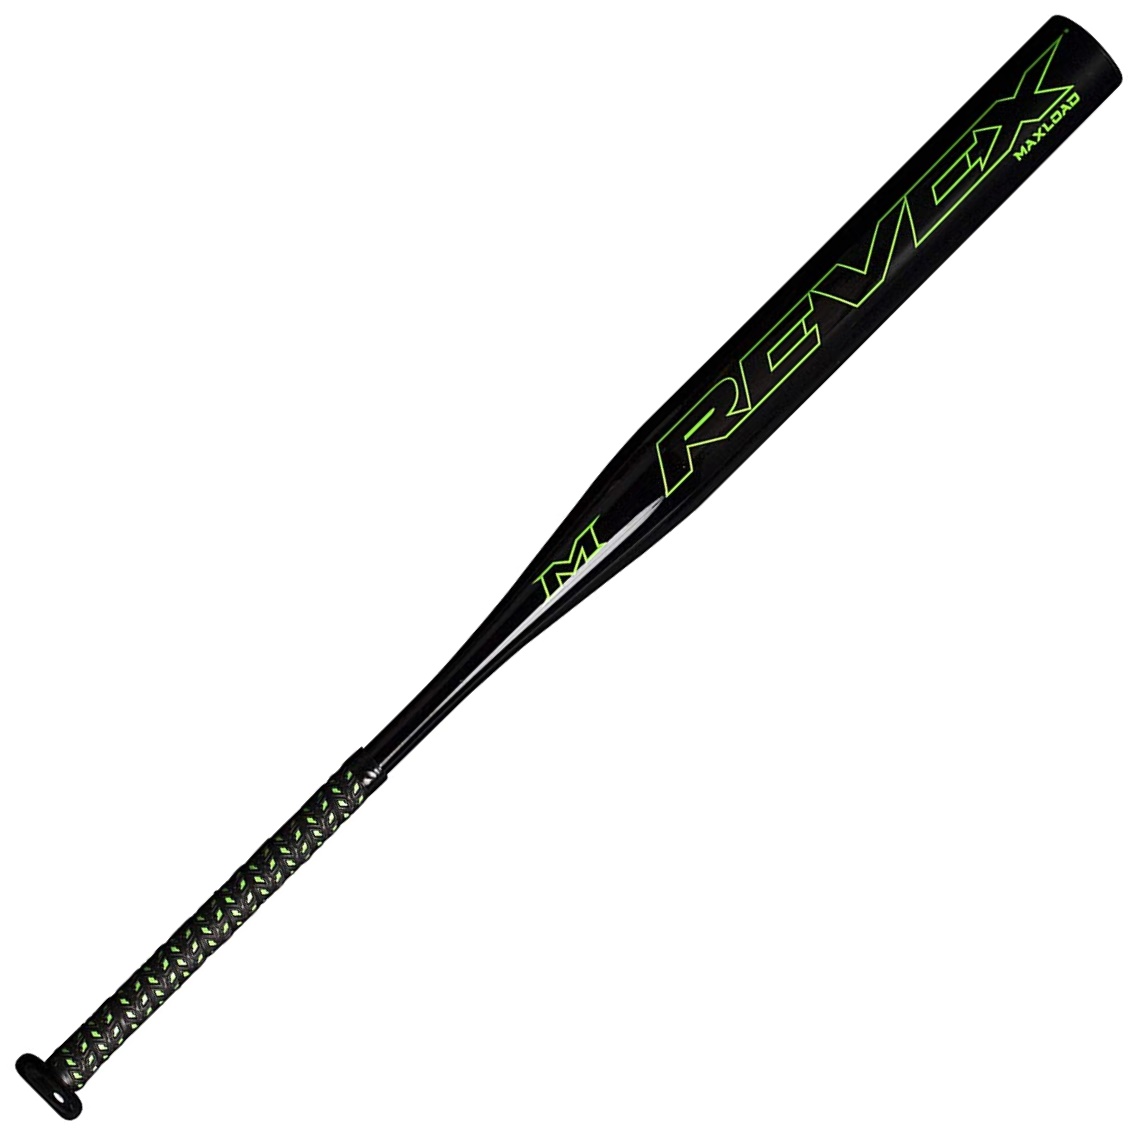 miken-rev-ex-14-one-piece-maxload-slowpitch-softball-bat-34-inch-26-oz MREV21-3-26 Miken  The Miken 2021 Rev-Ex Maxload all association bat delivers a solid